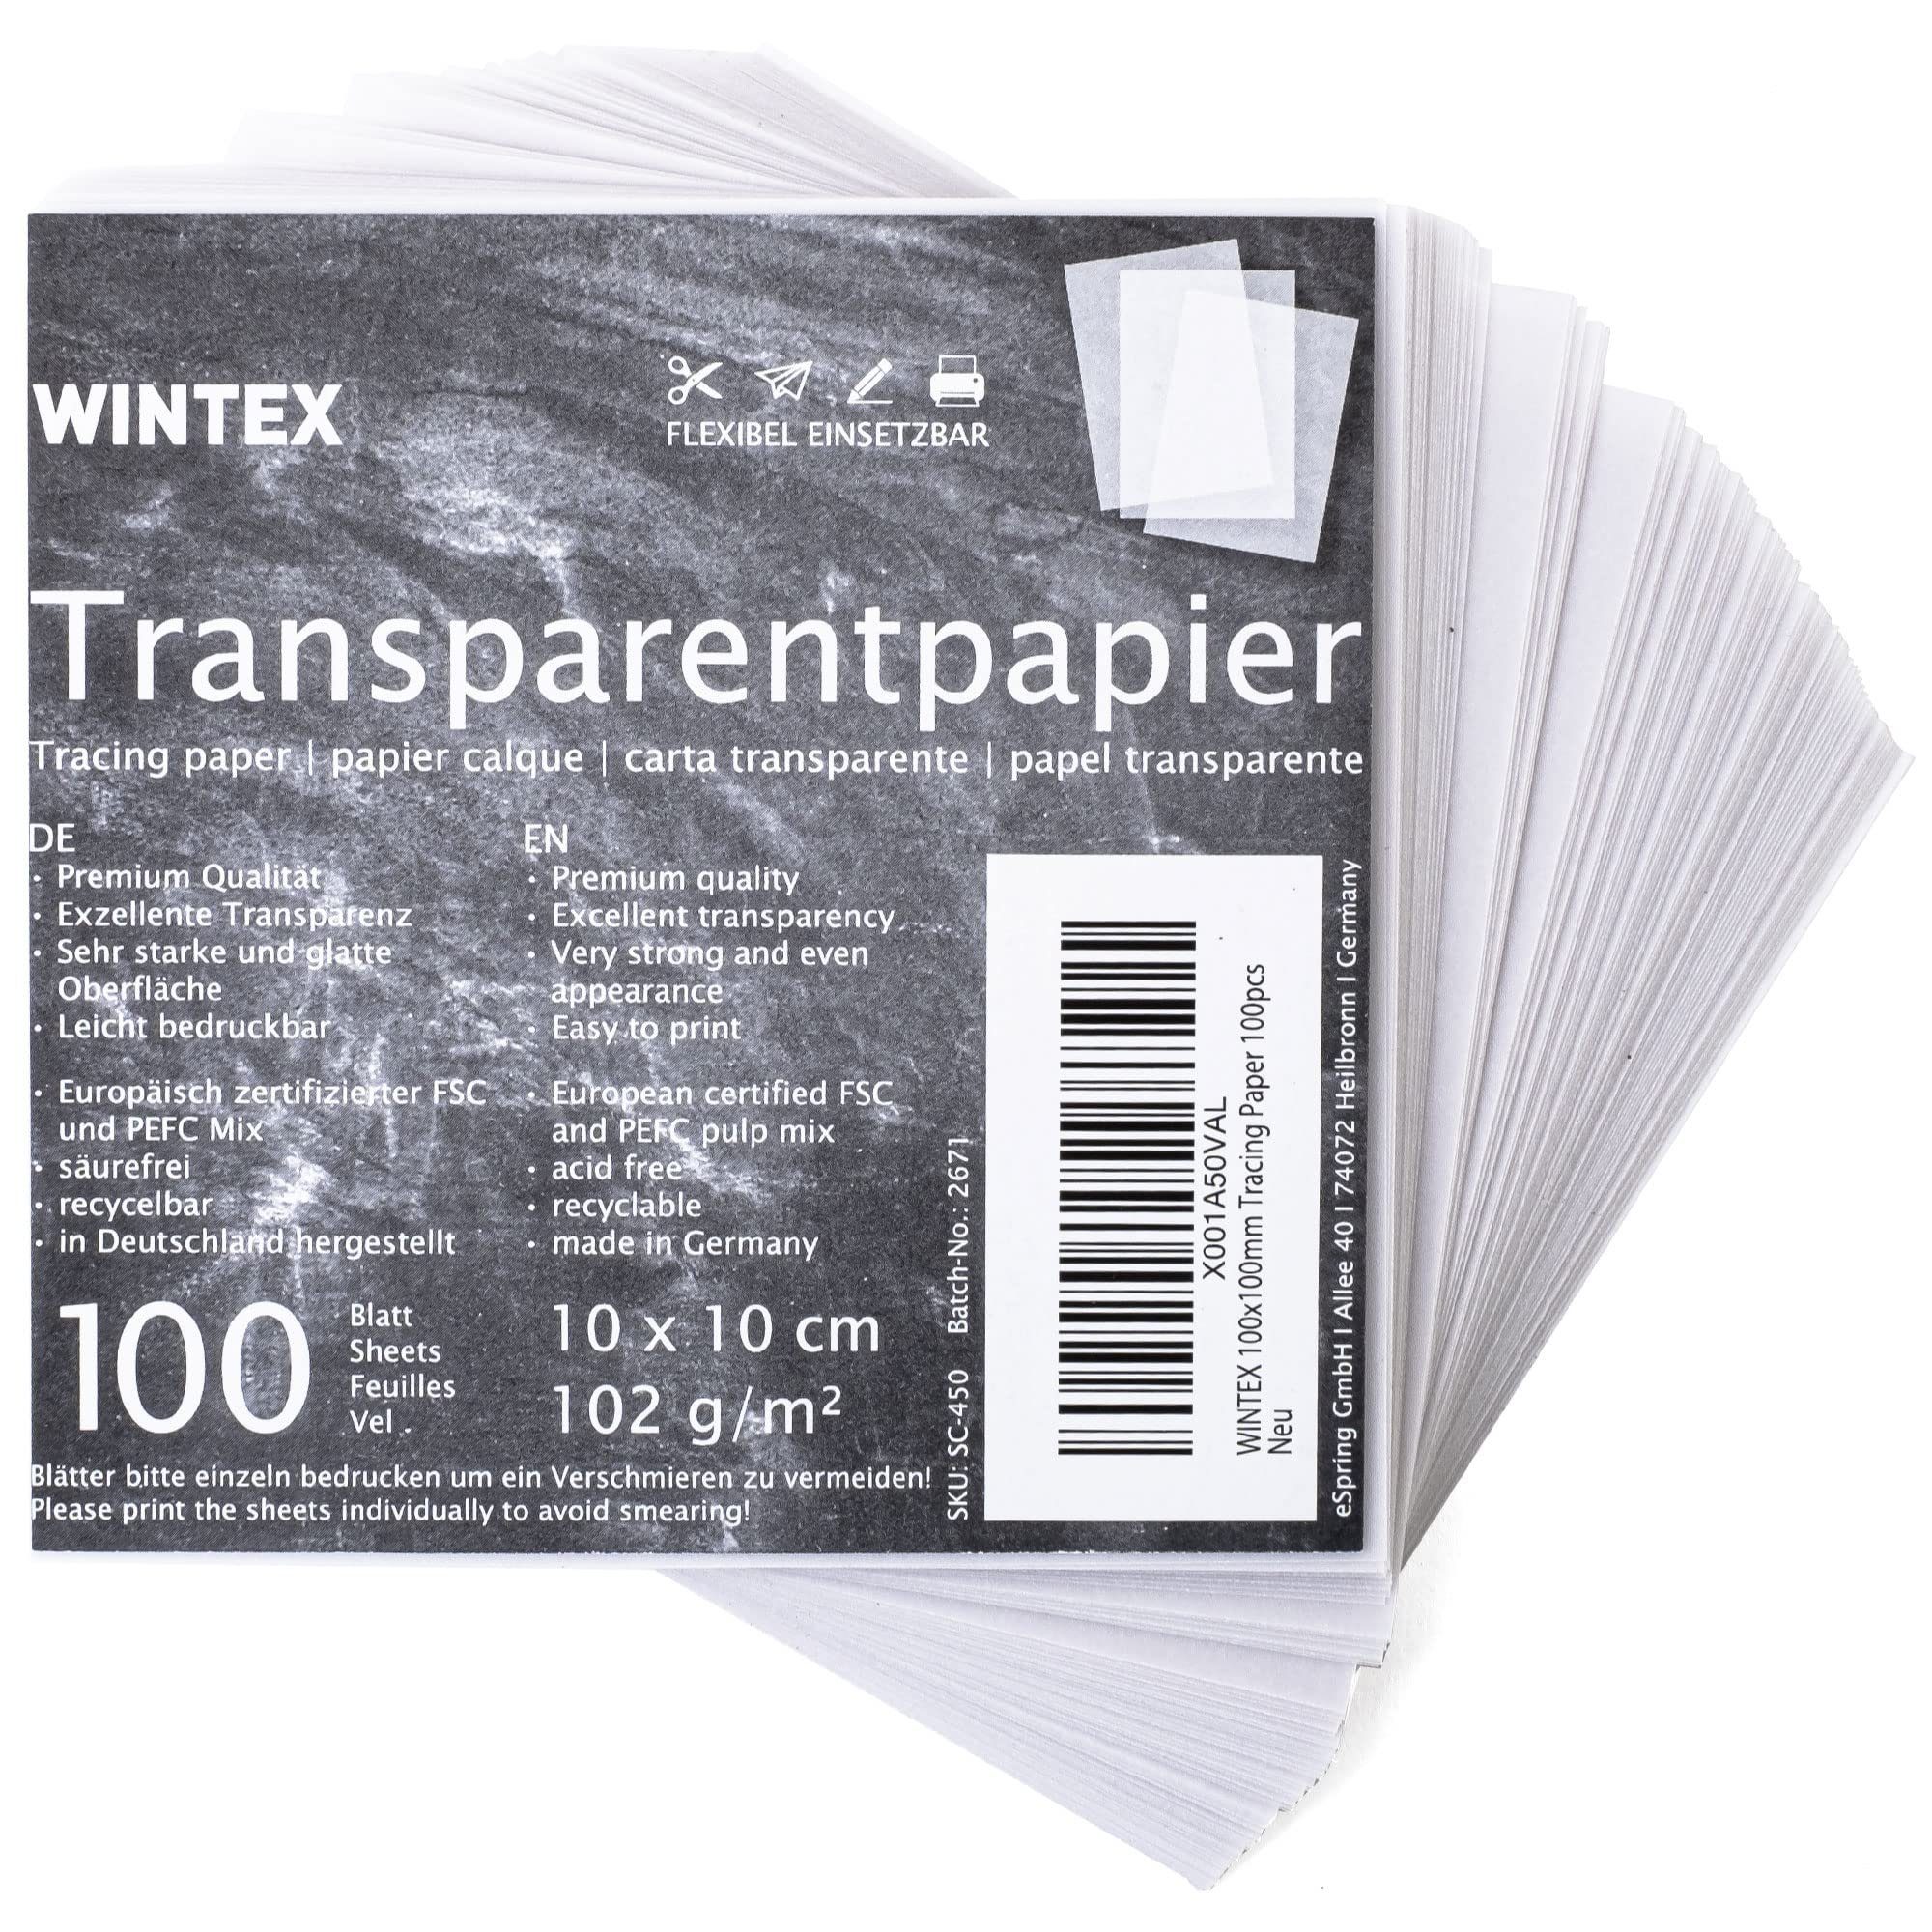 WINTEX Transparentpapier Transparentes Bastelpapier 10x10 cm, 100 Blatt, weiß & bedruckbar, Transparentes Bastelpapier 10x10 cm, 100 Blatt